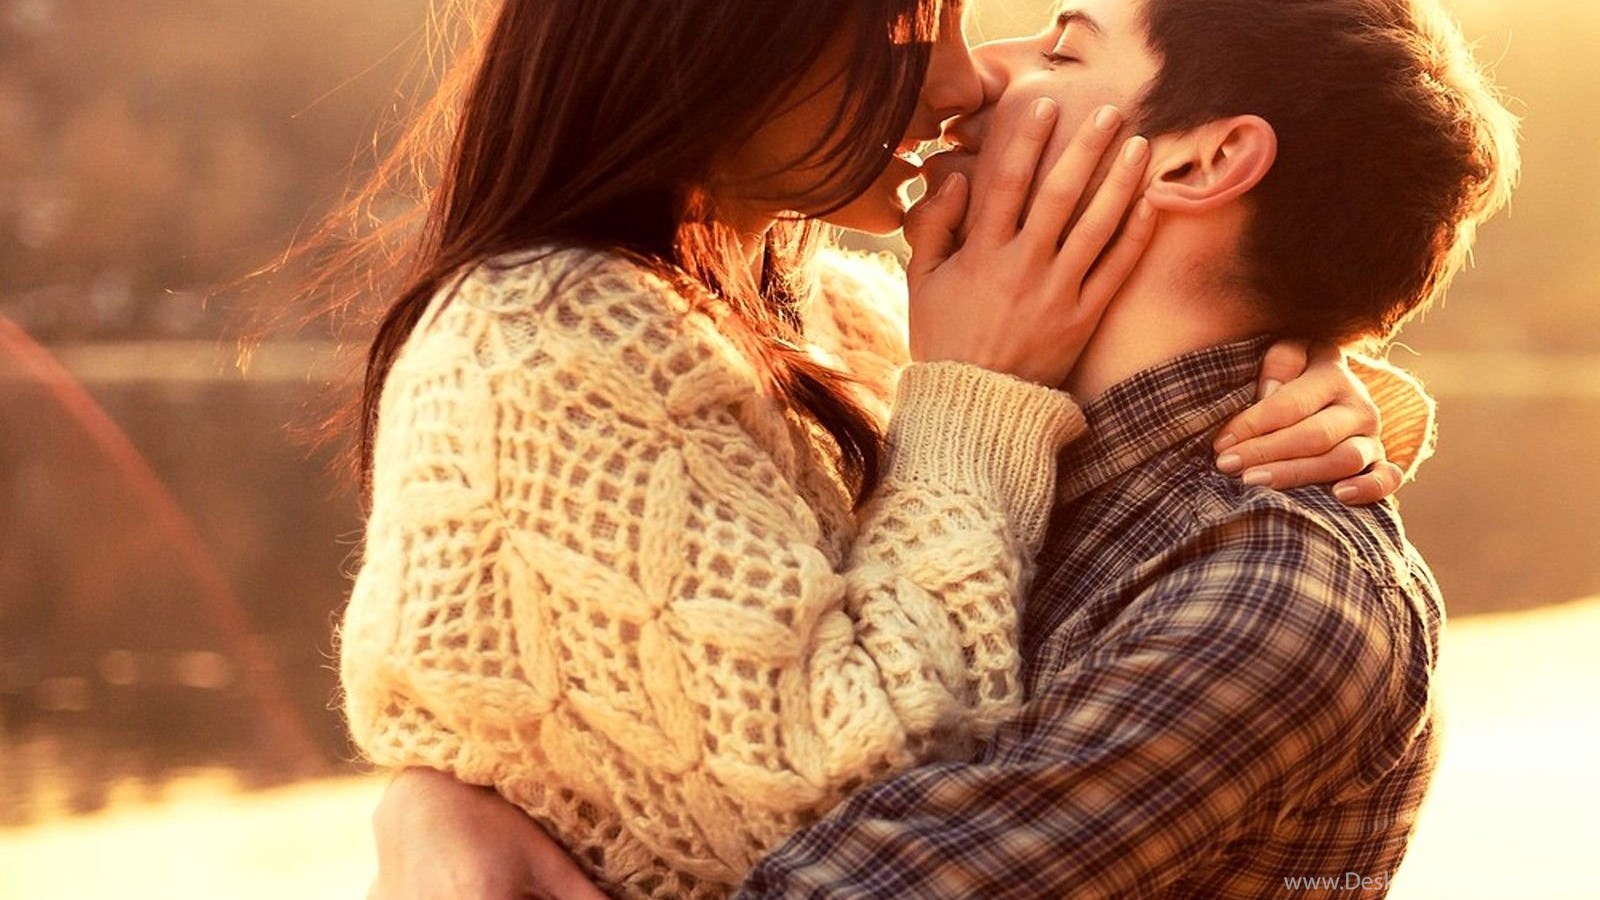 hot kiss wallpaper download,romance,love,beauty,interaction,nose